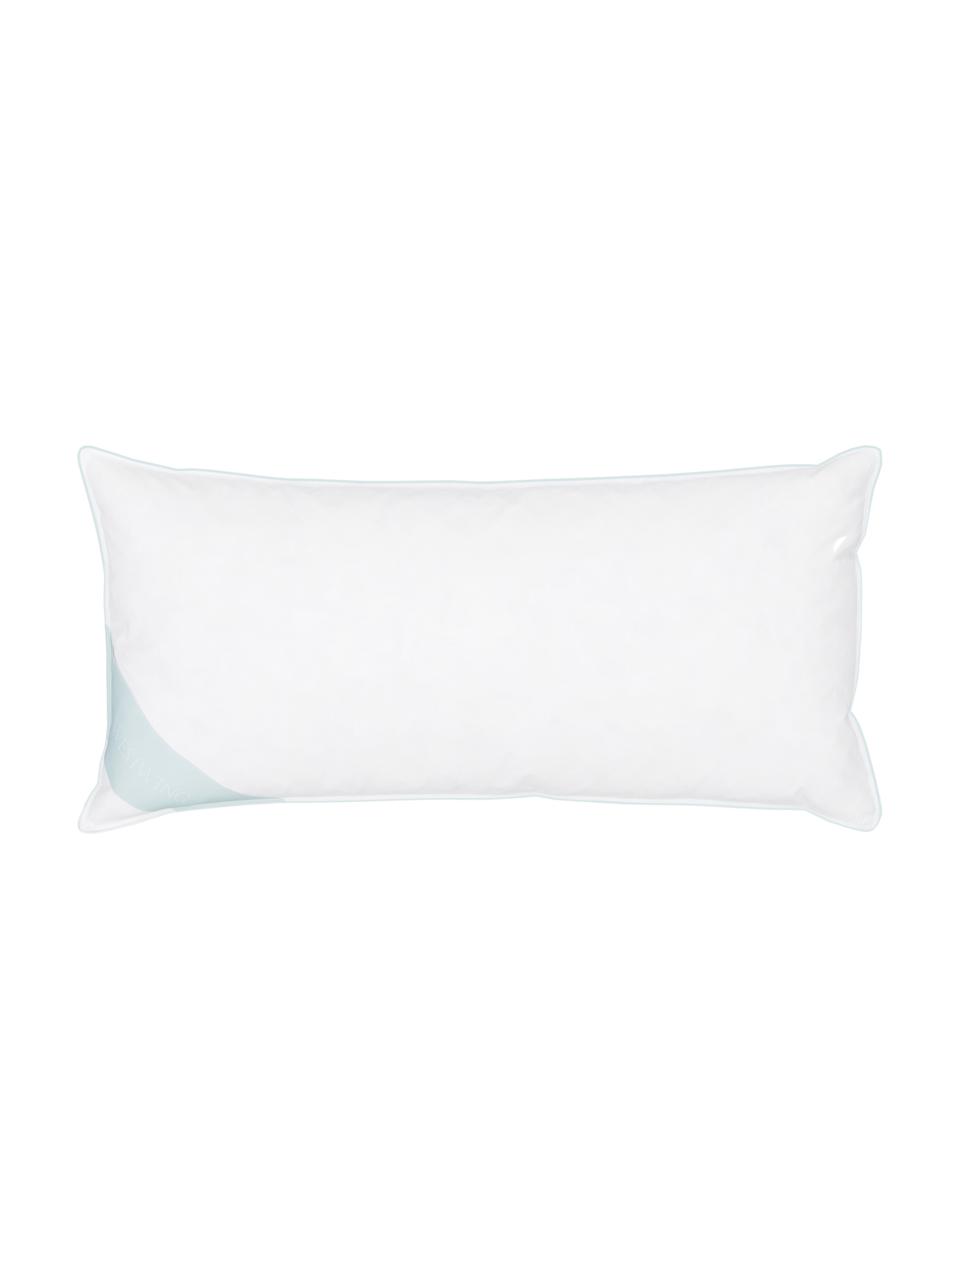 Almohada de plumas Comfort, dura, Blanco con ribete turquesa satinado, An 45 x L 85 cm